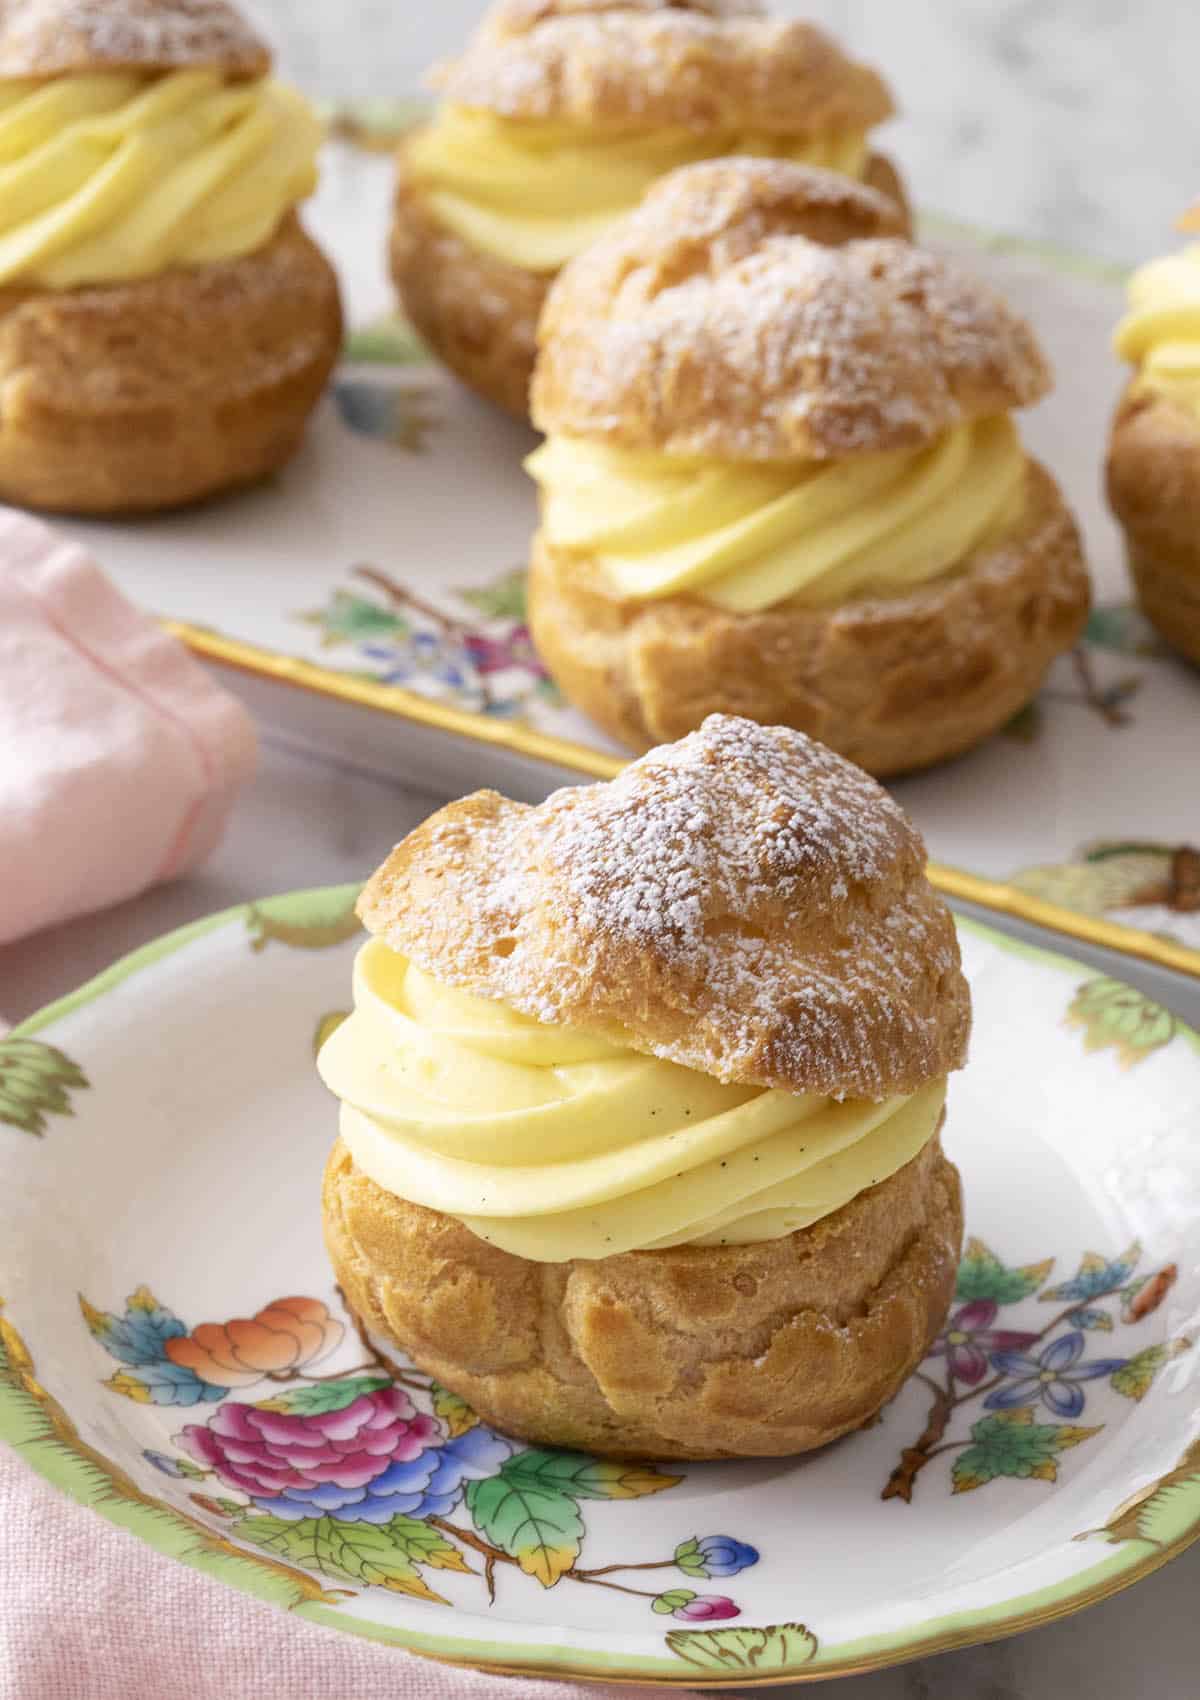 Cream puffs with a big swirl of vanilla pastry cream inside.